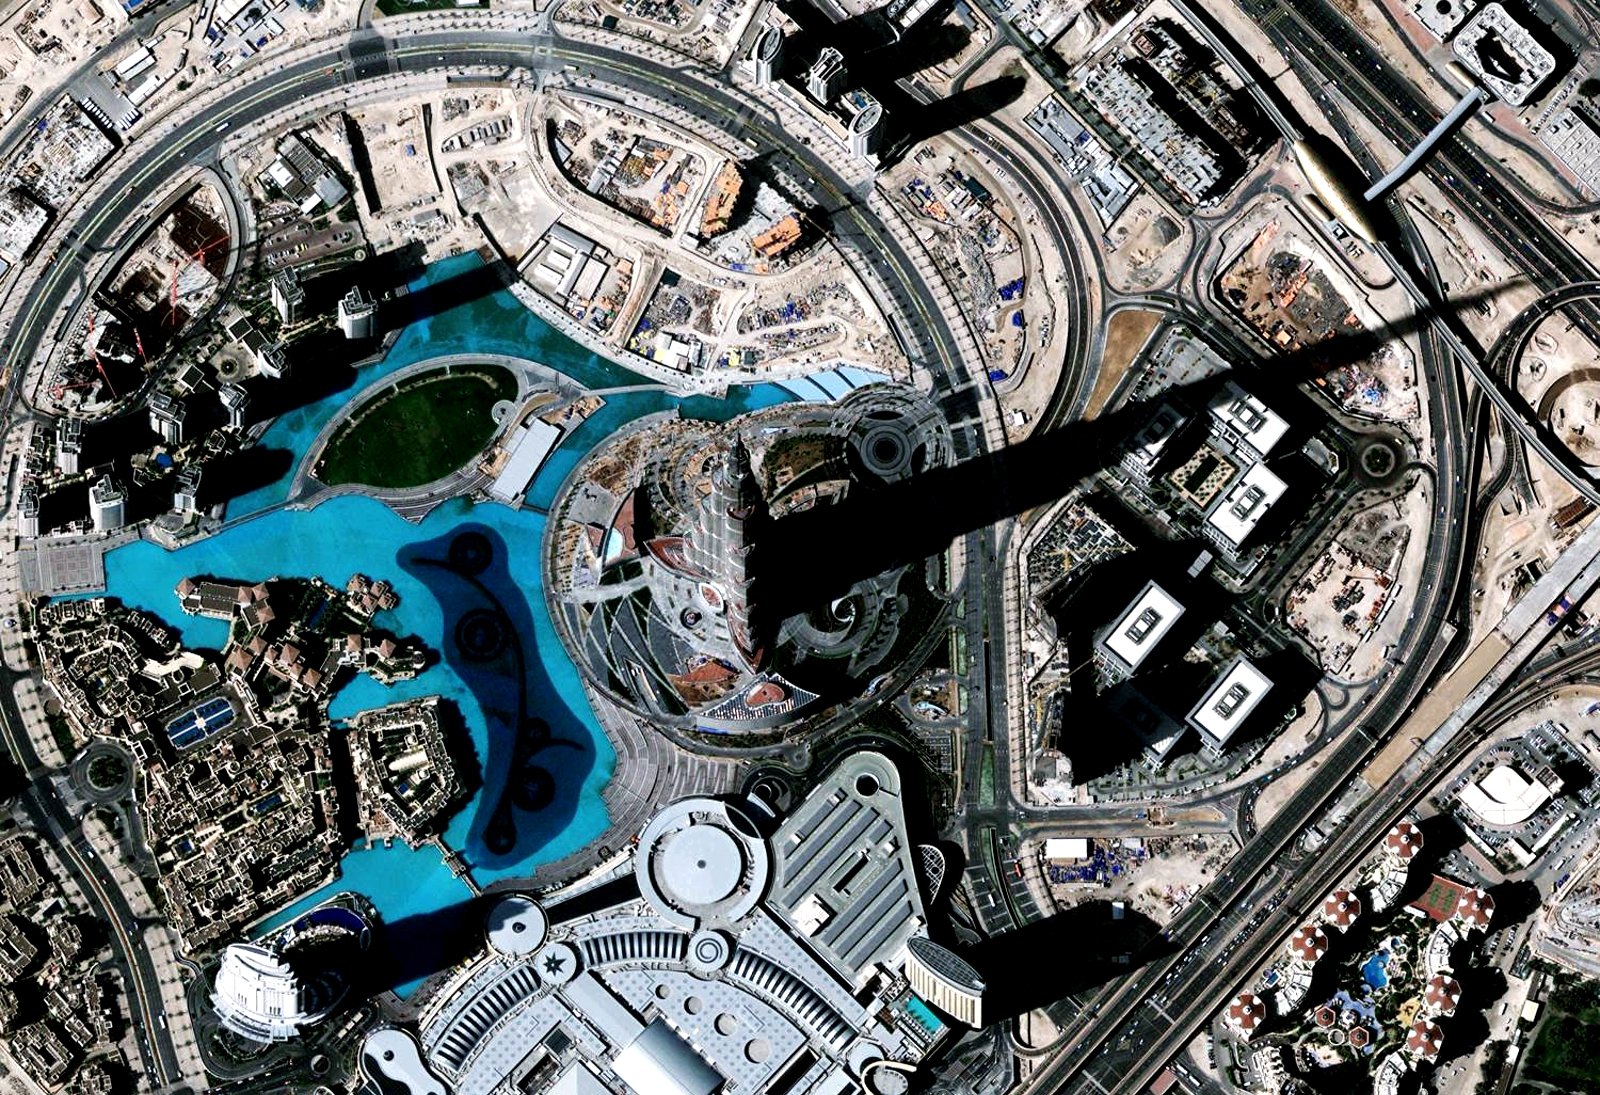 How to see the 8 kilometer shadow of Burj Khalifa in Dubai